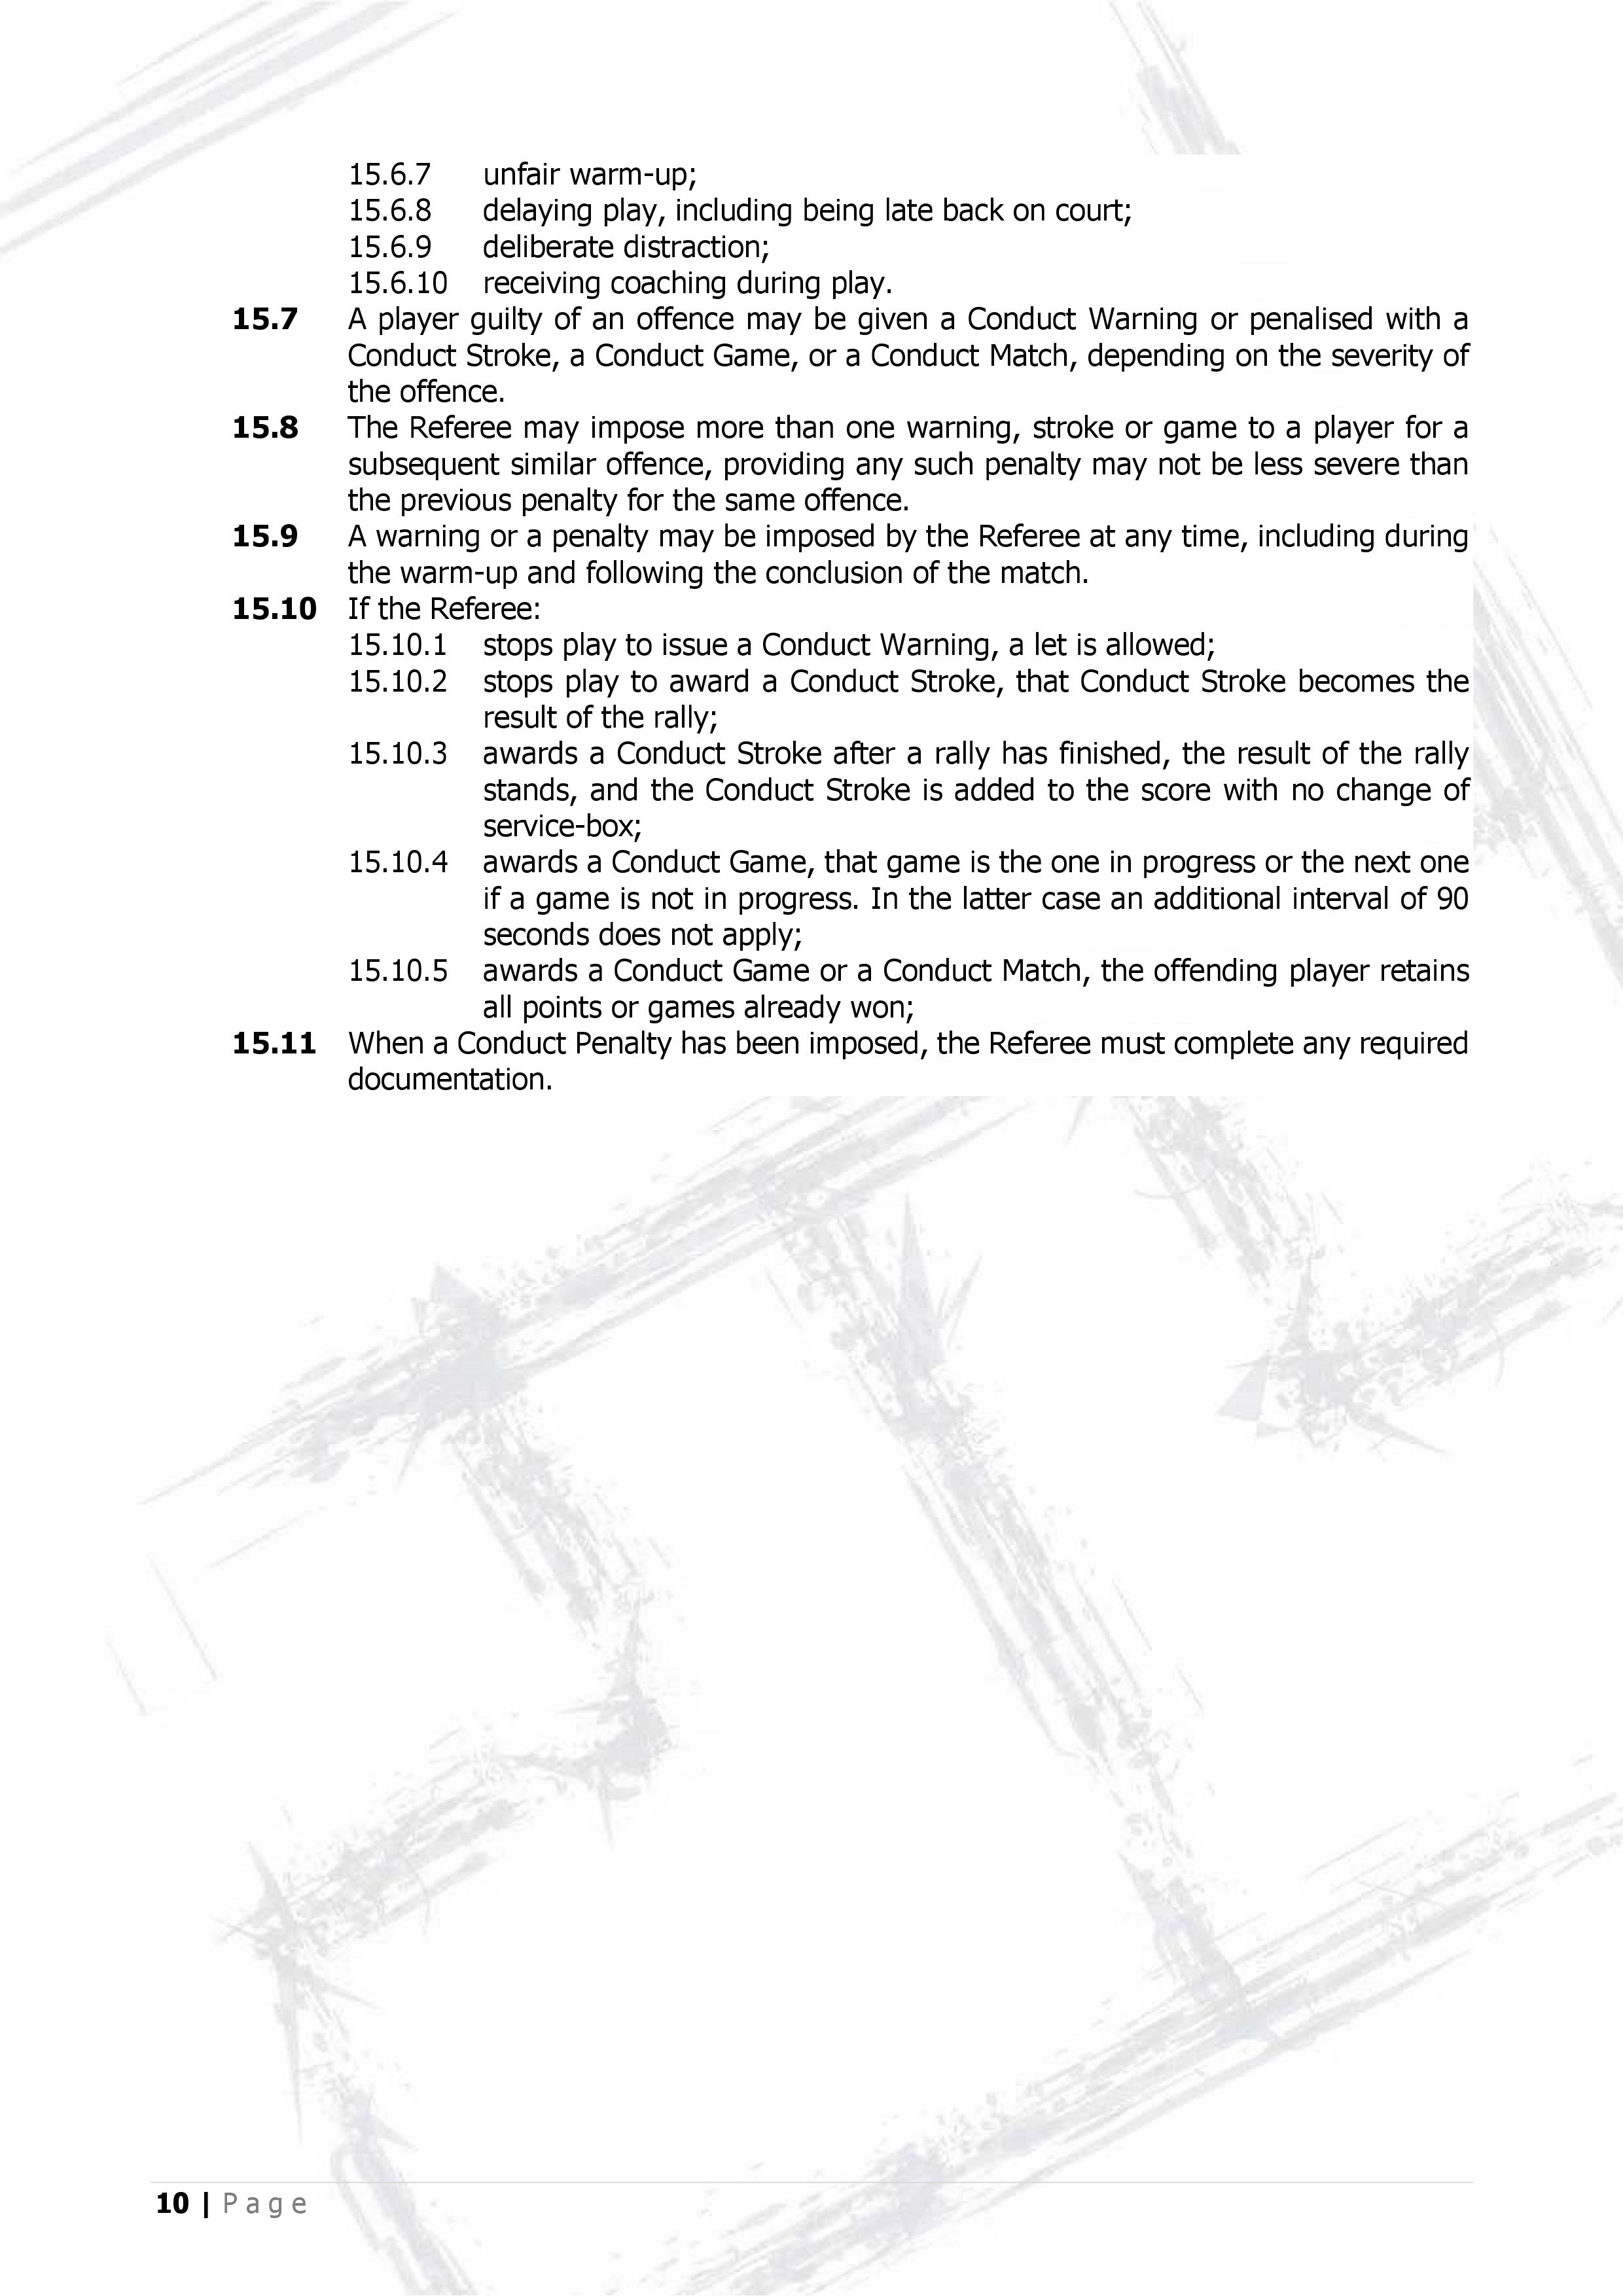 World Squash Federation Rules - Global Squash Coach - Page 12.jpg